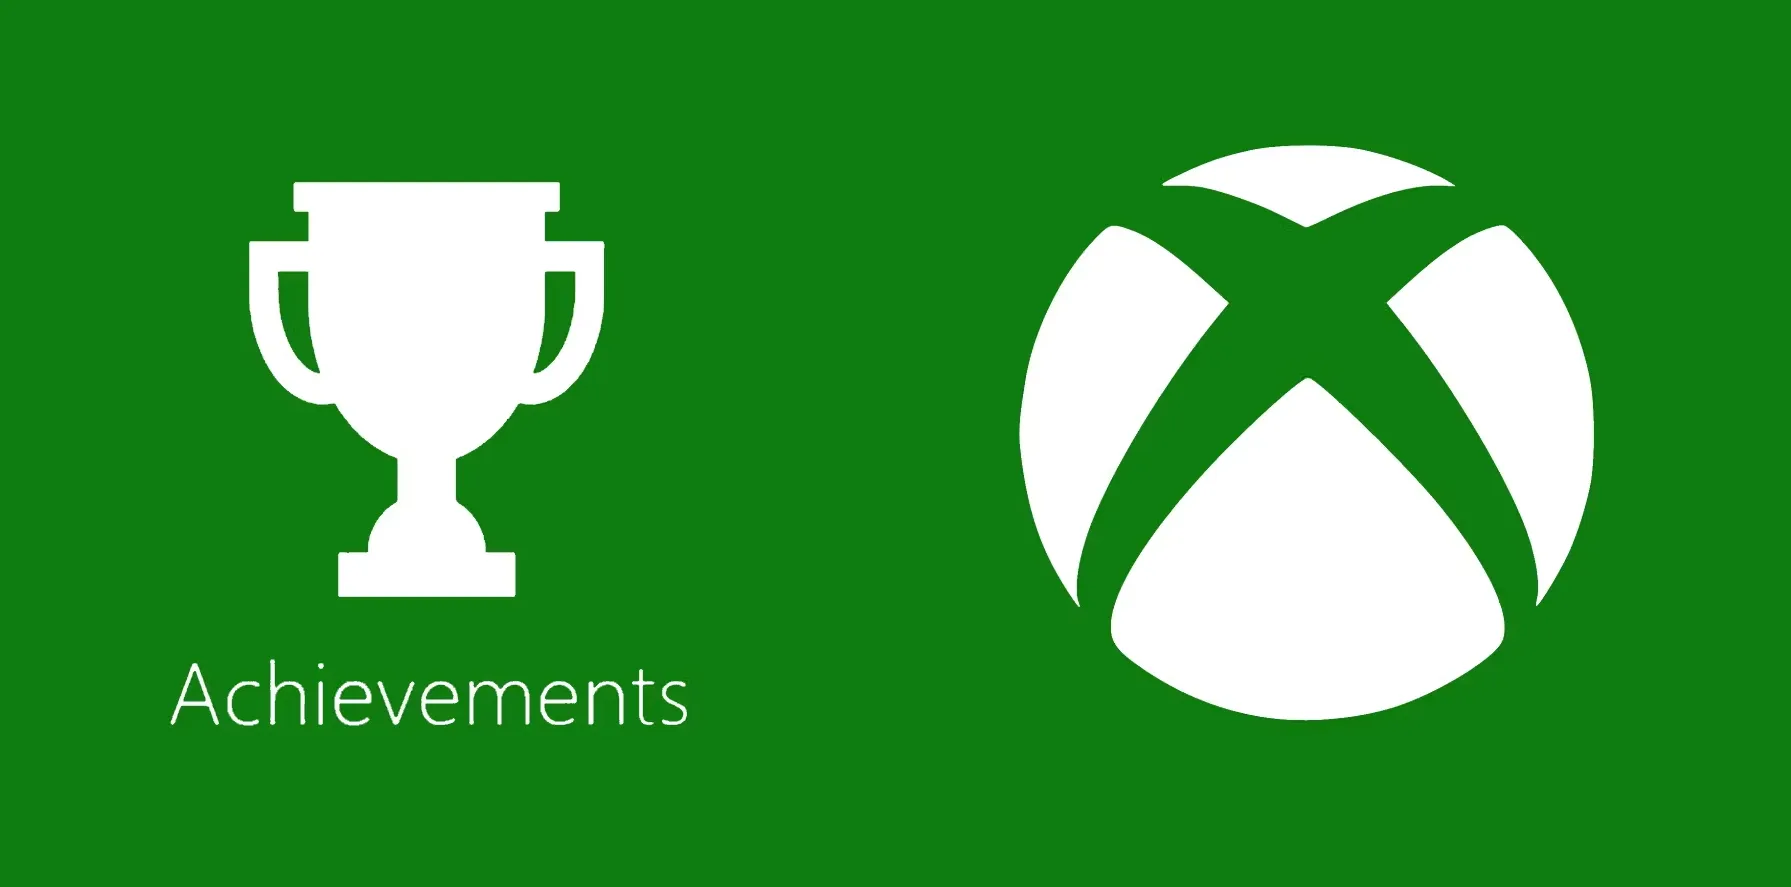 Xbox achievements